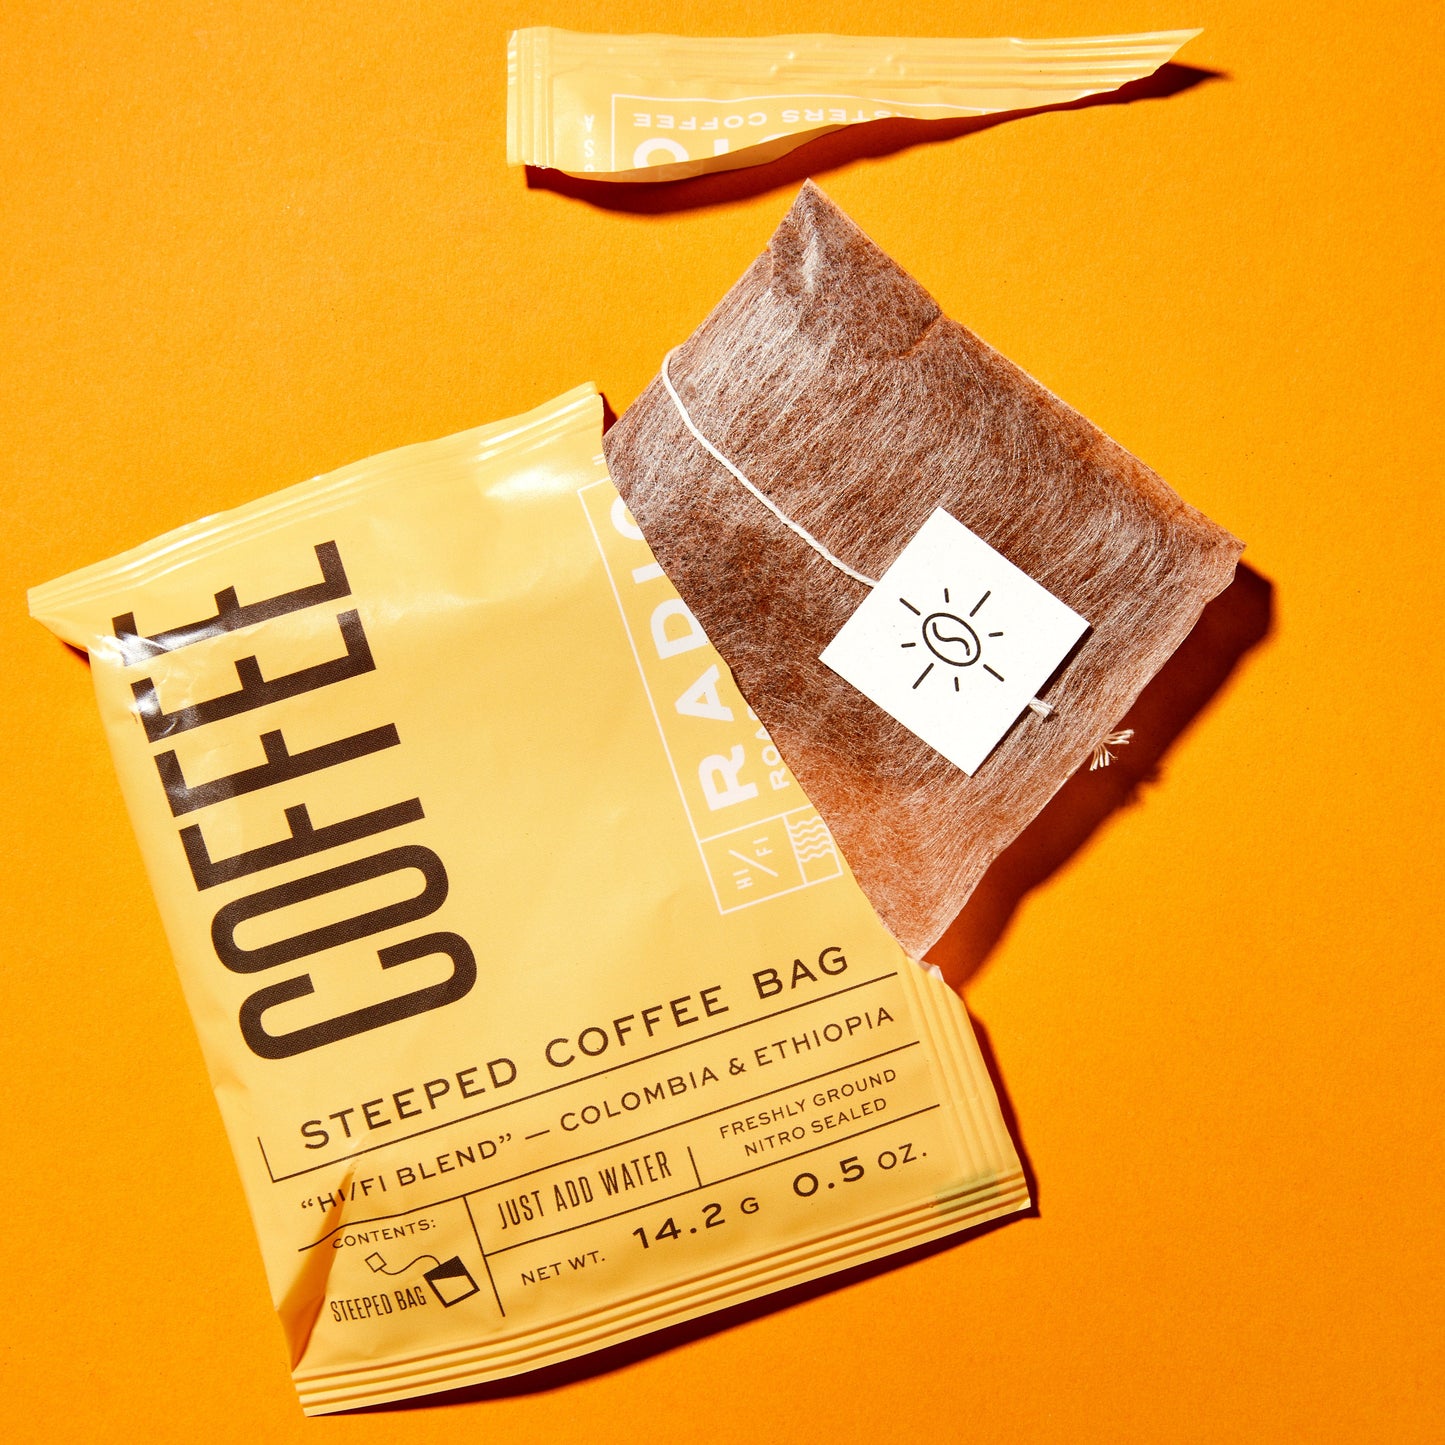 Radio Roasters Coffee Coffee 10 pack loose Steeped Coffee Bag: Hi/Fi Blend